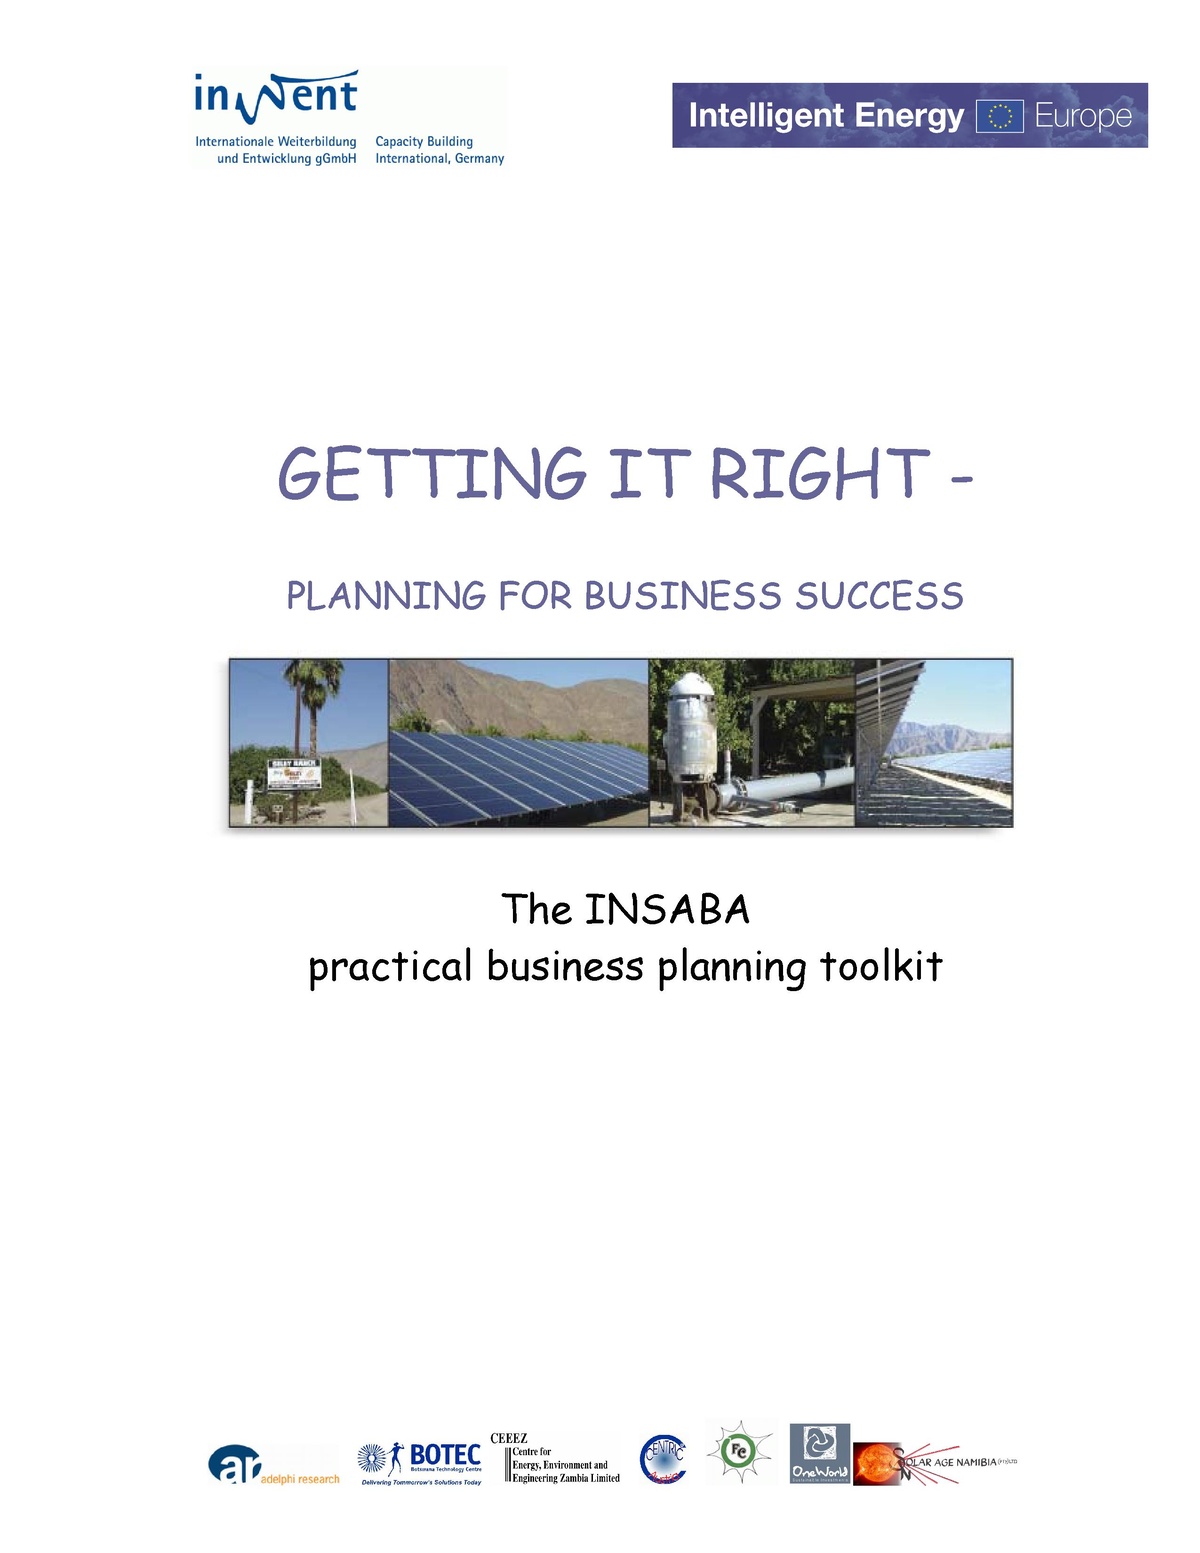 File:Insaba business planning manual.pdf - energypedia